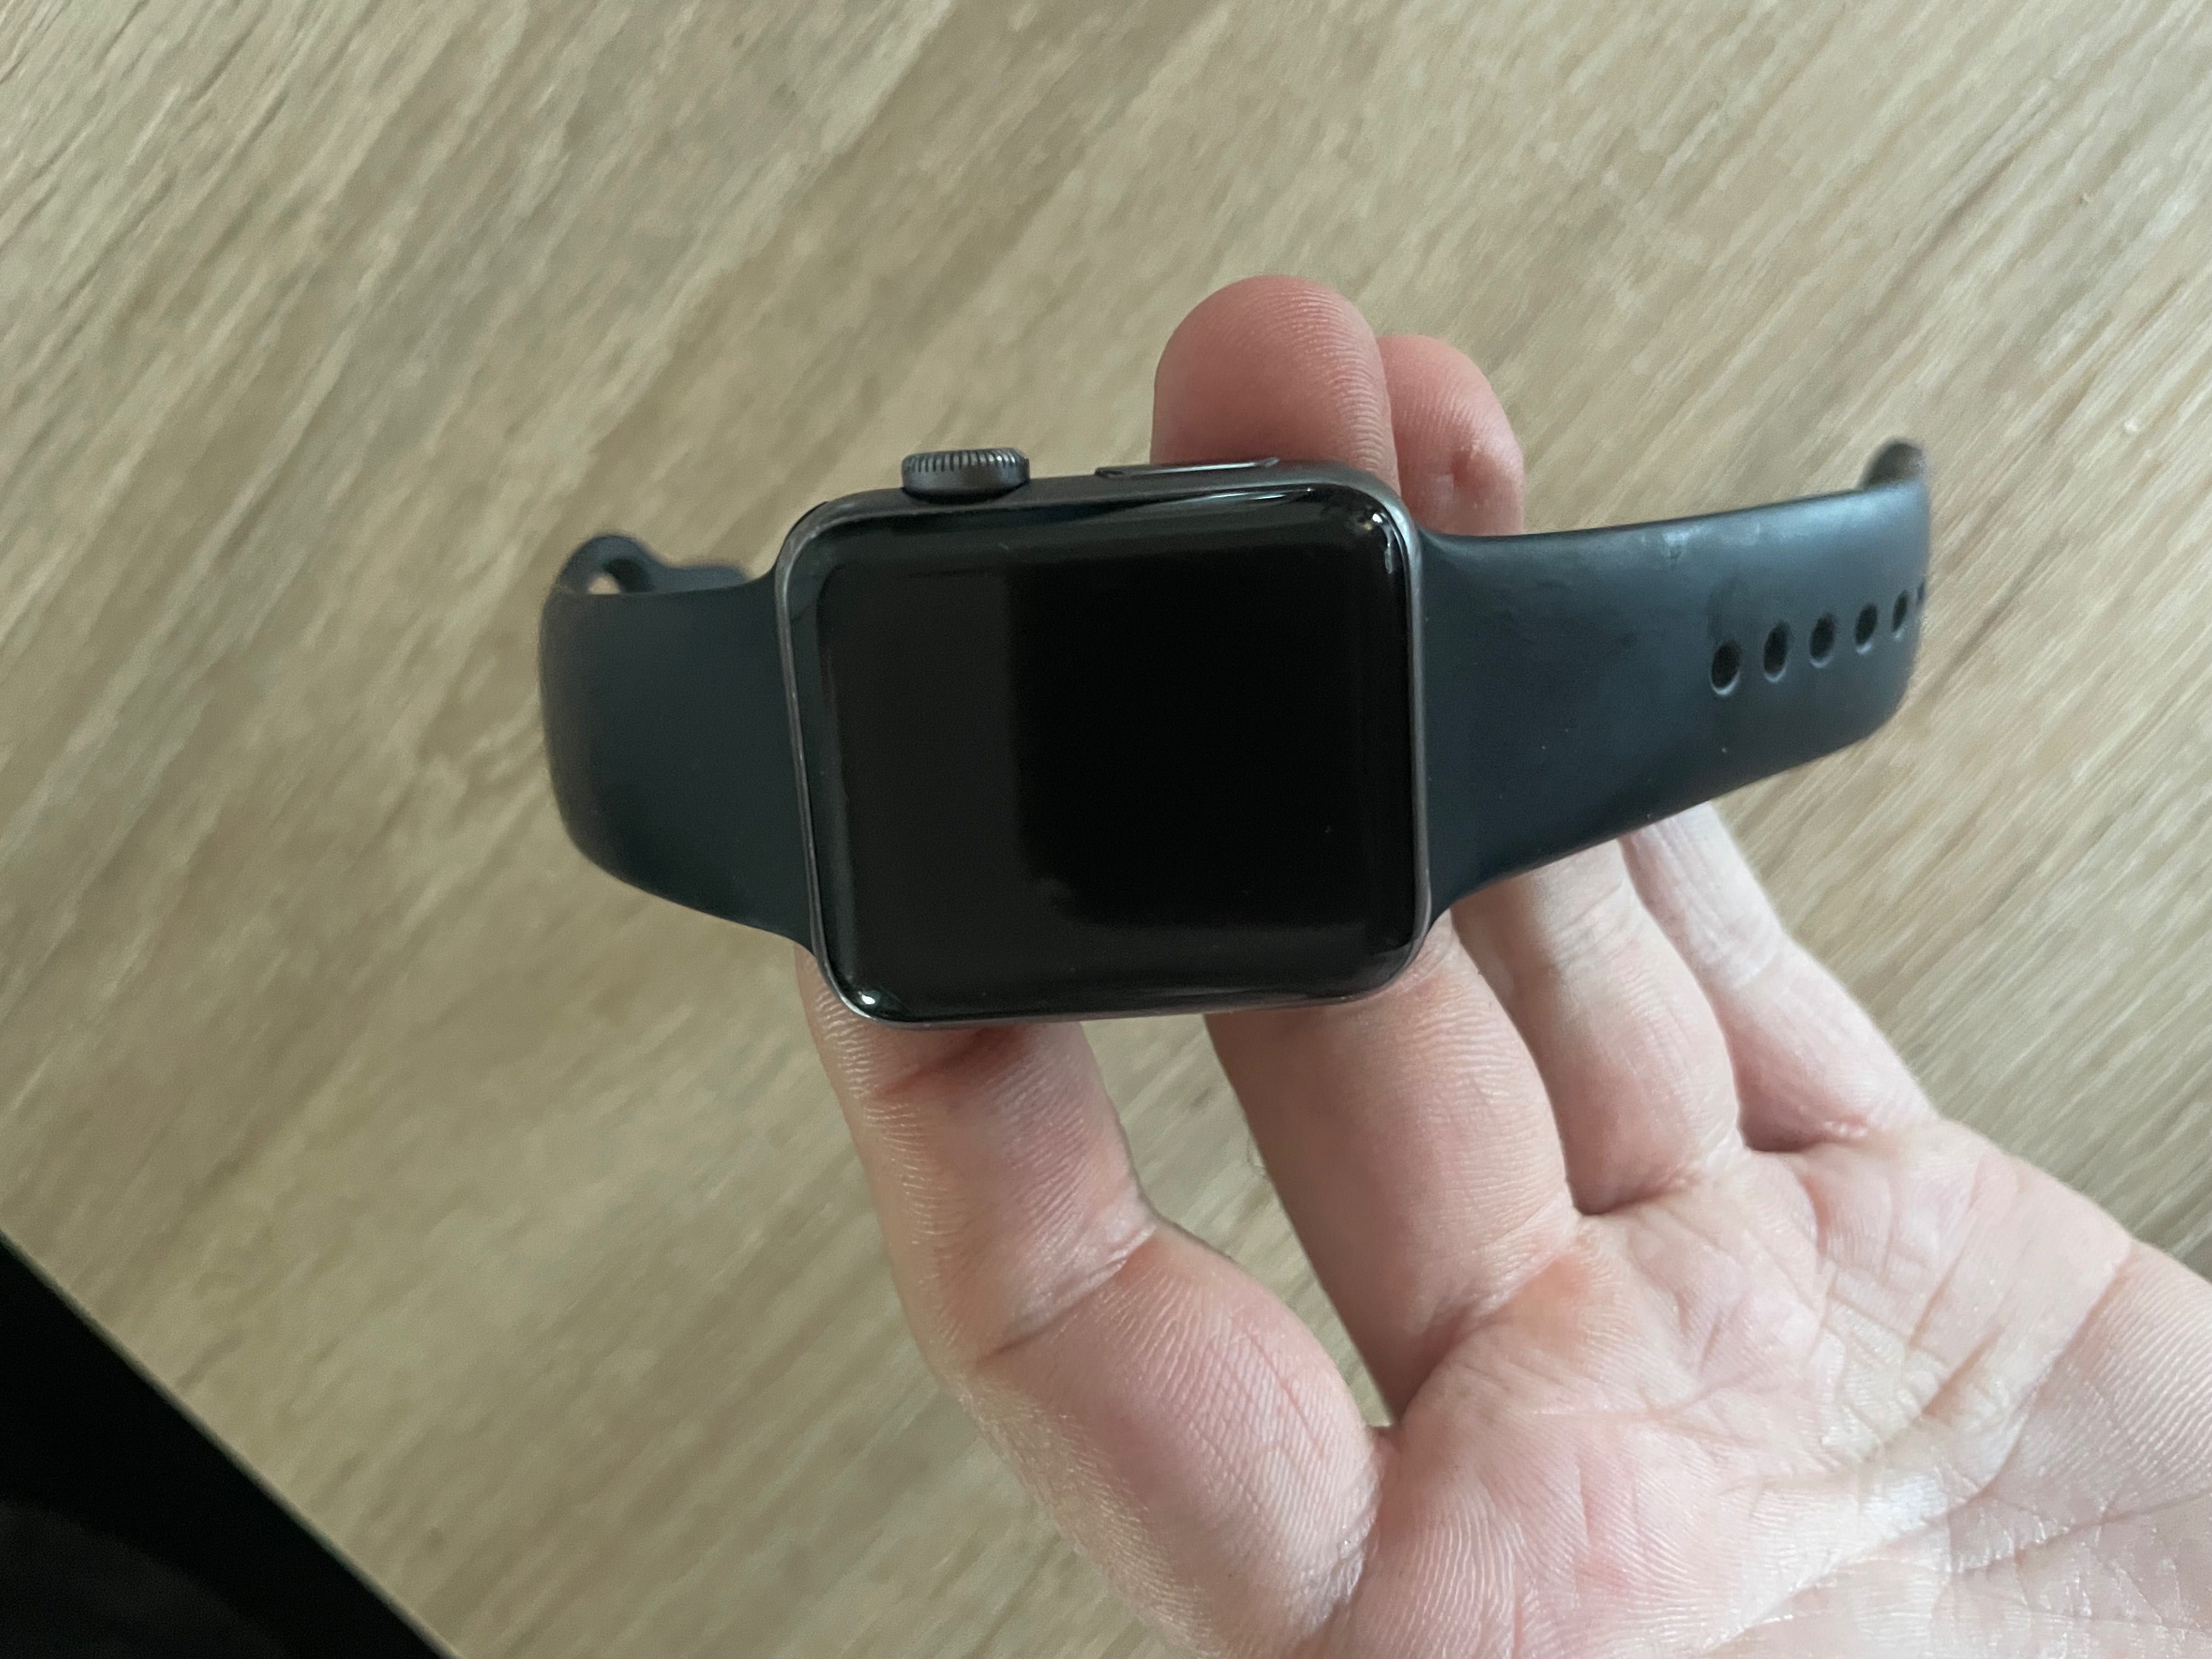 Apple Watch 3 38 gray